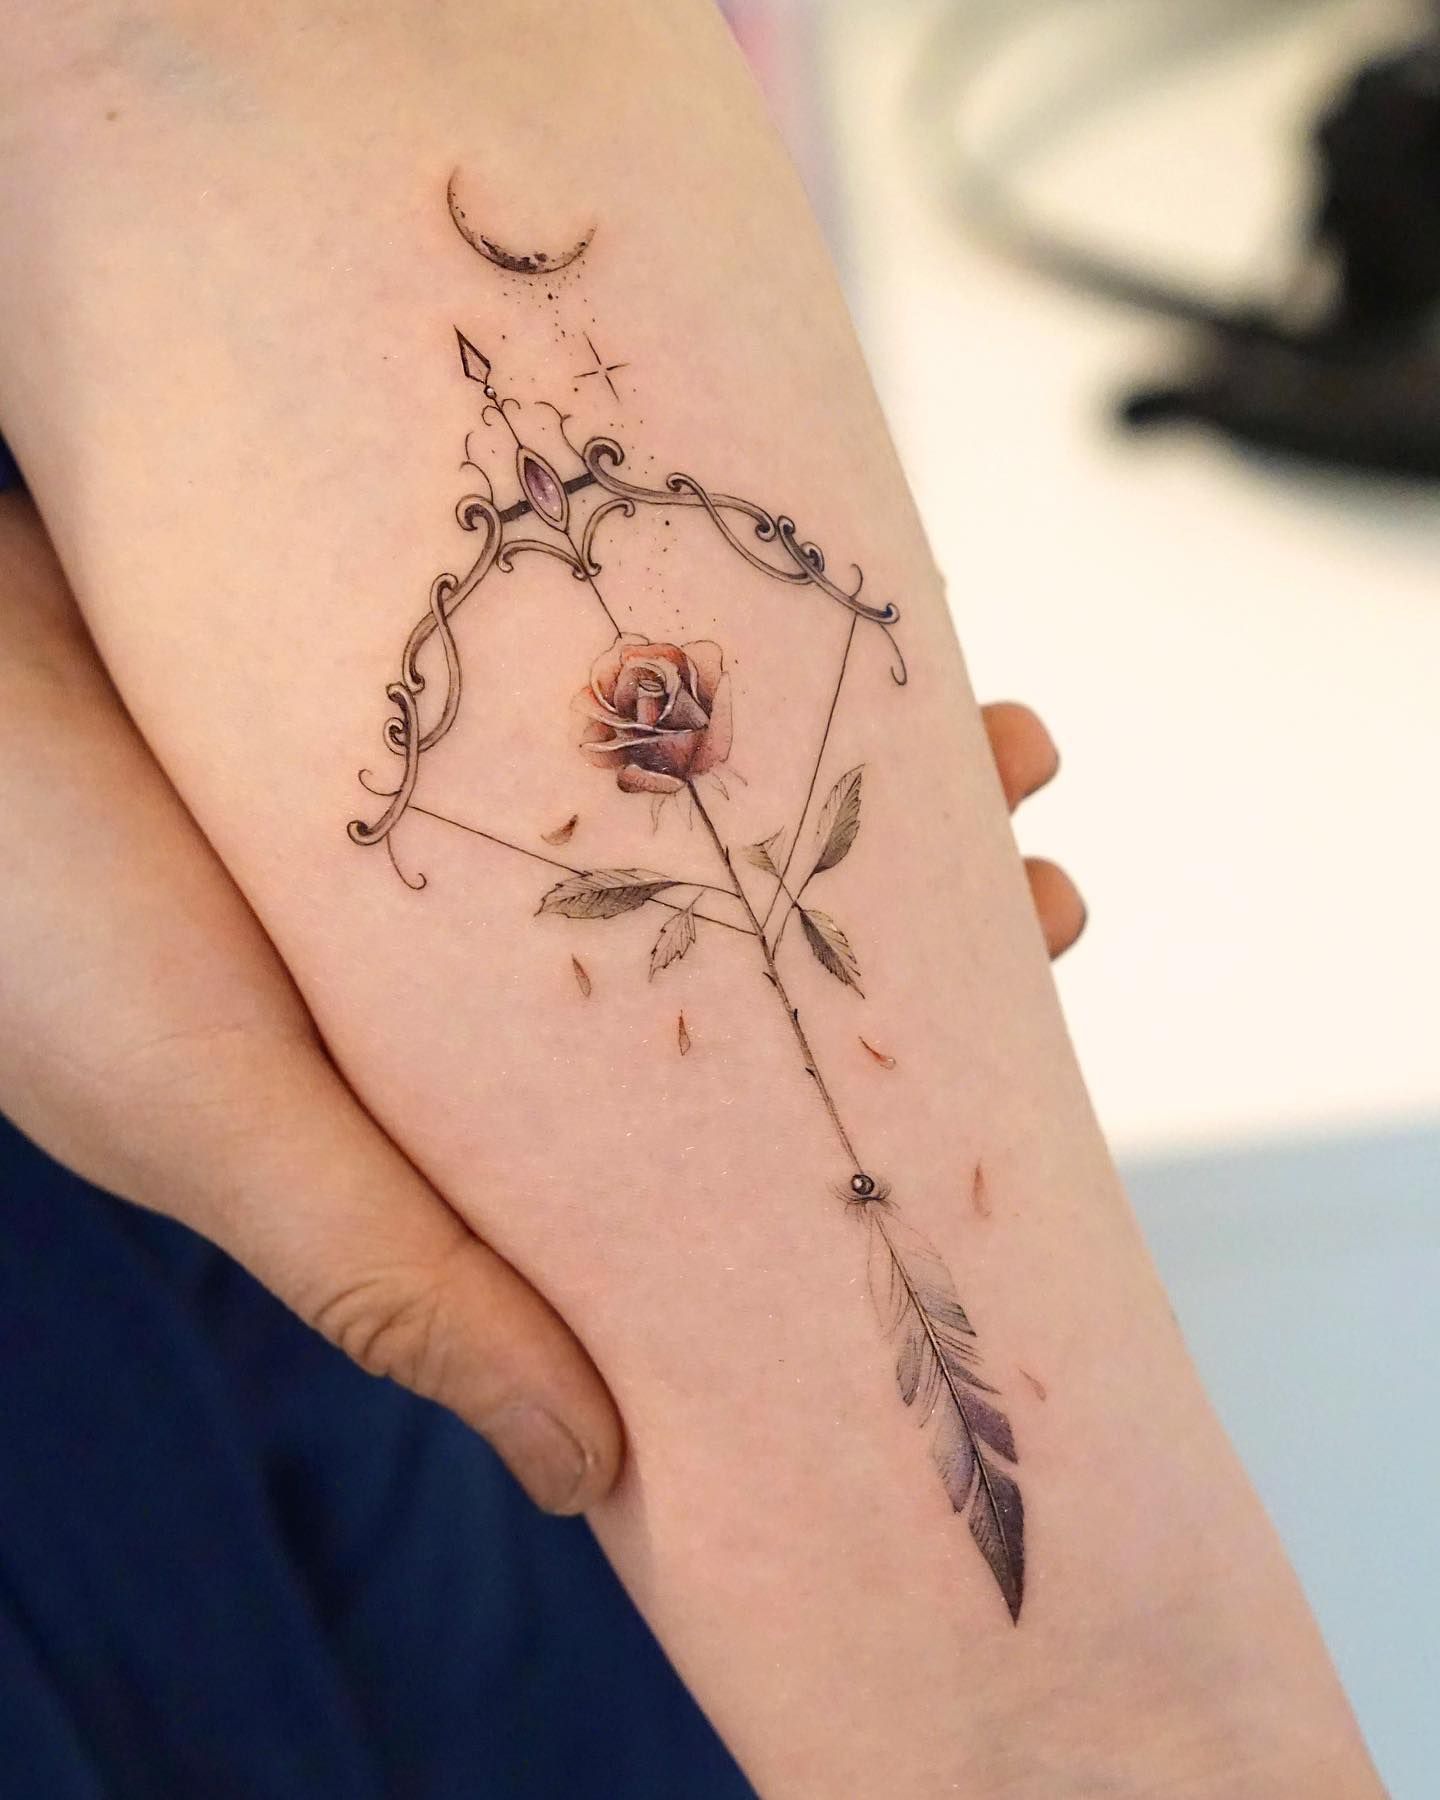 100 Most Popular Lotus Tattoos Ideas for Women  MyBodiArt